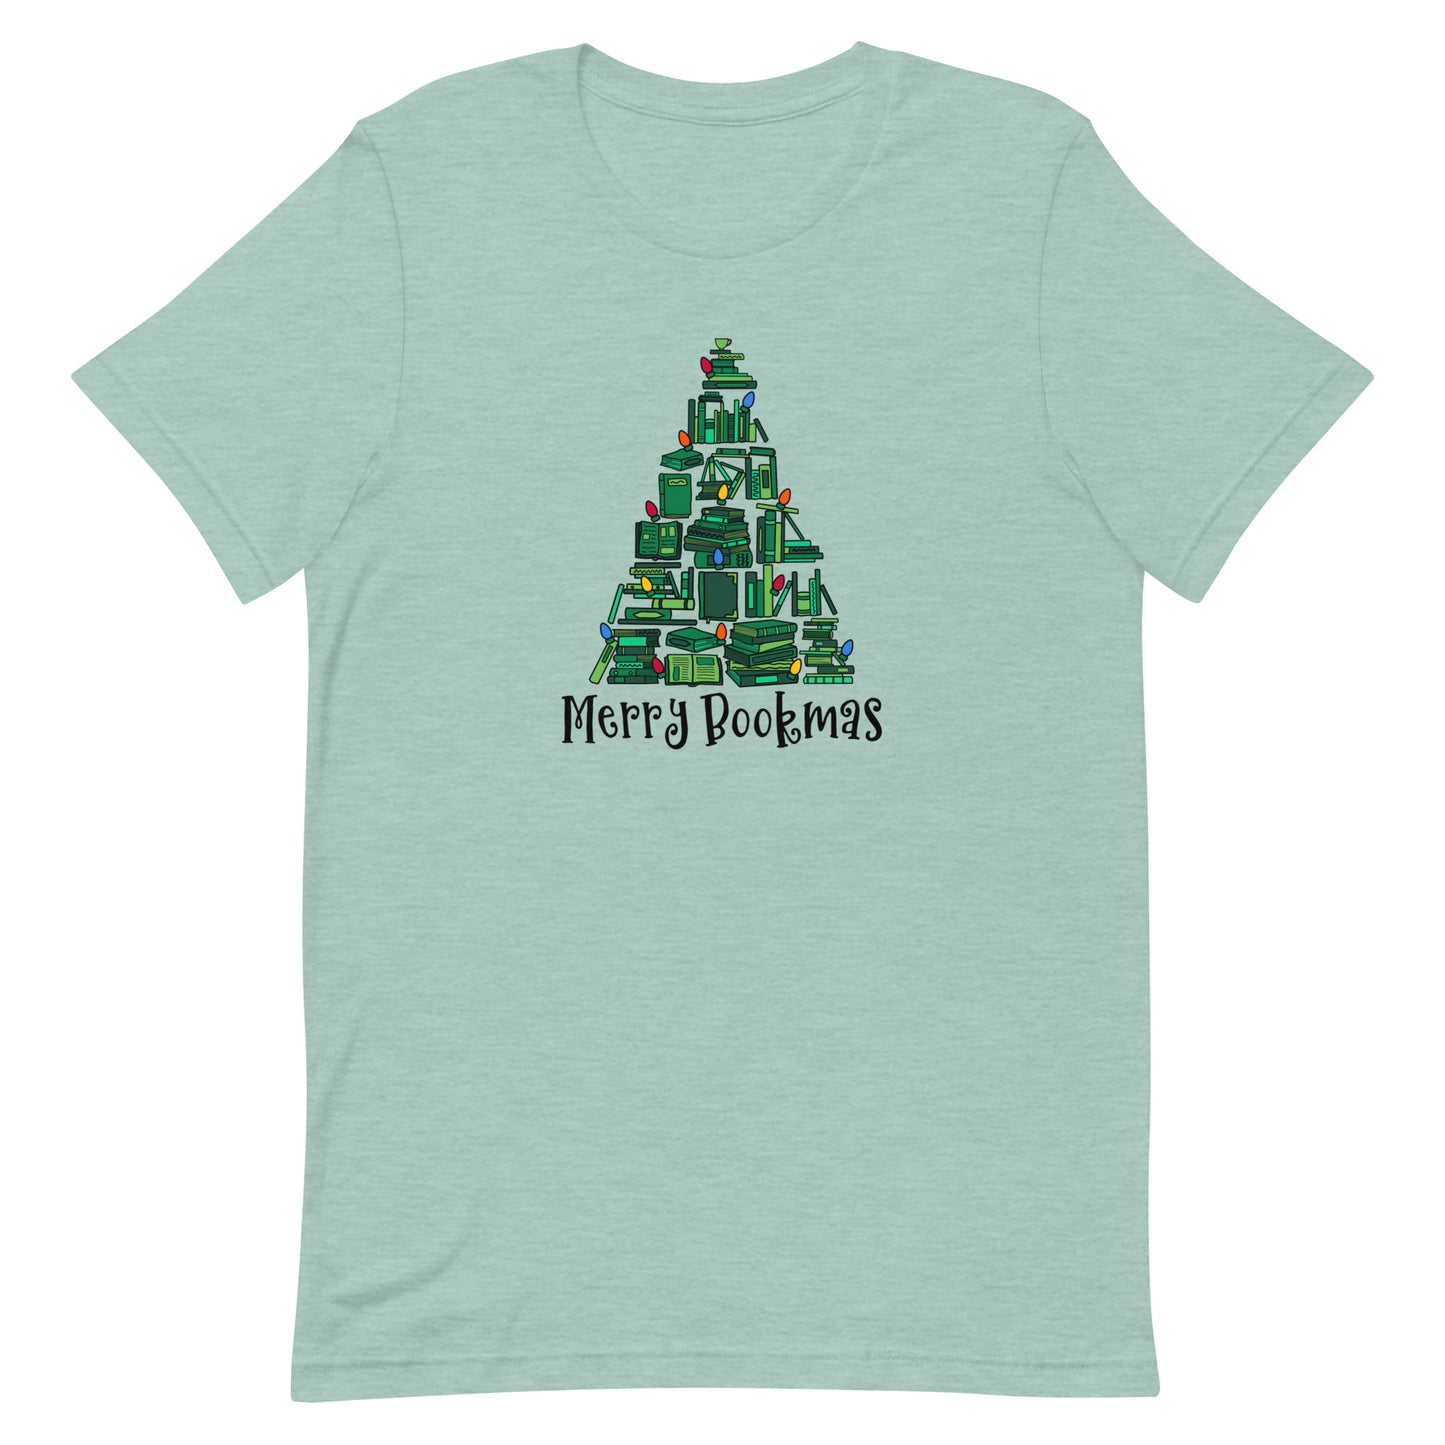 merry bookmas (book tree) t-shirt